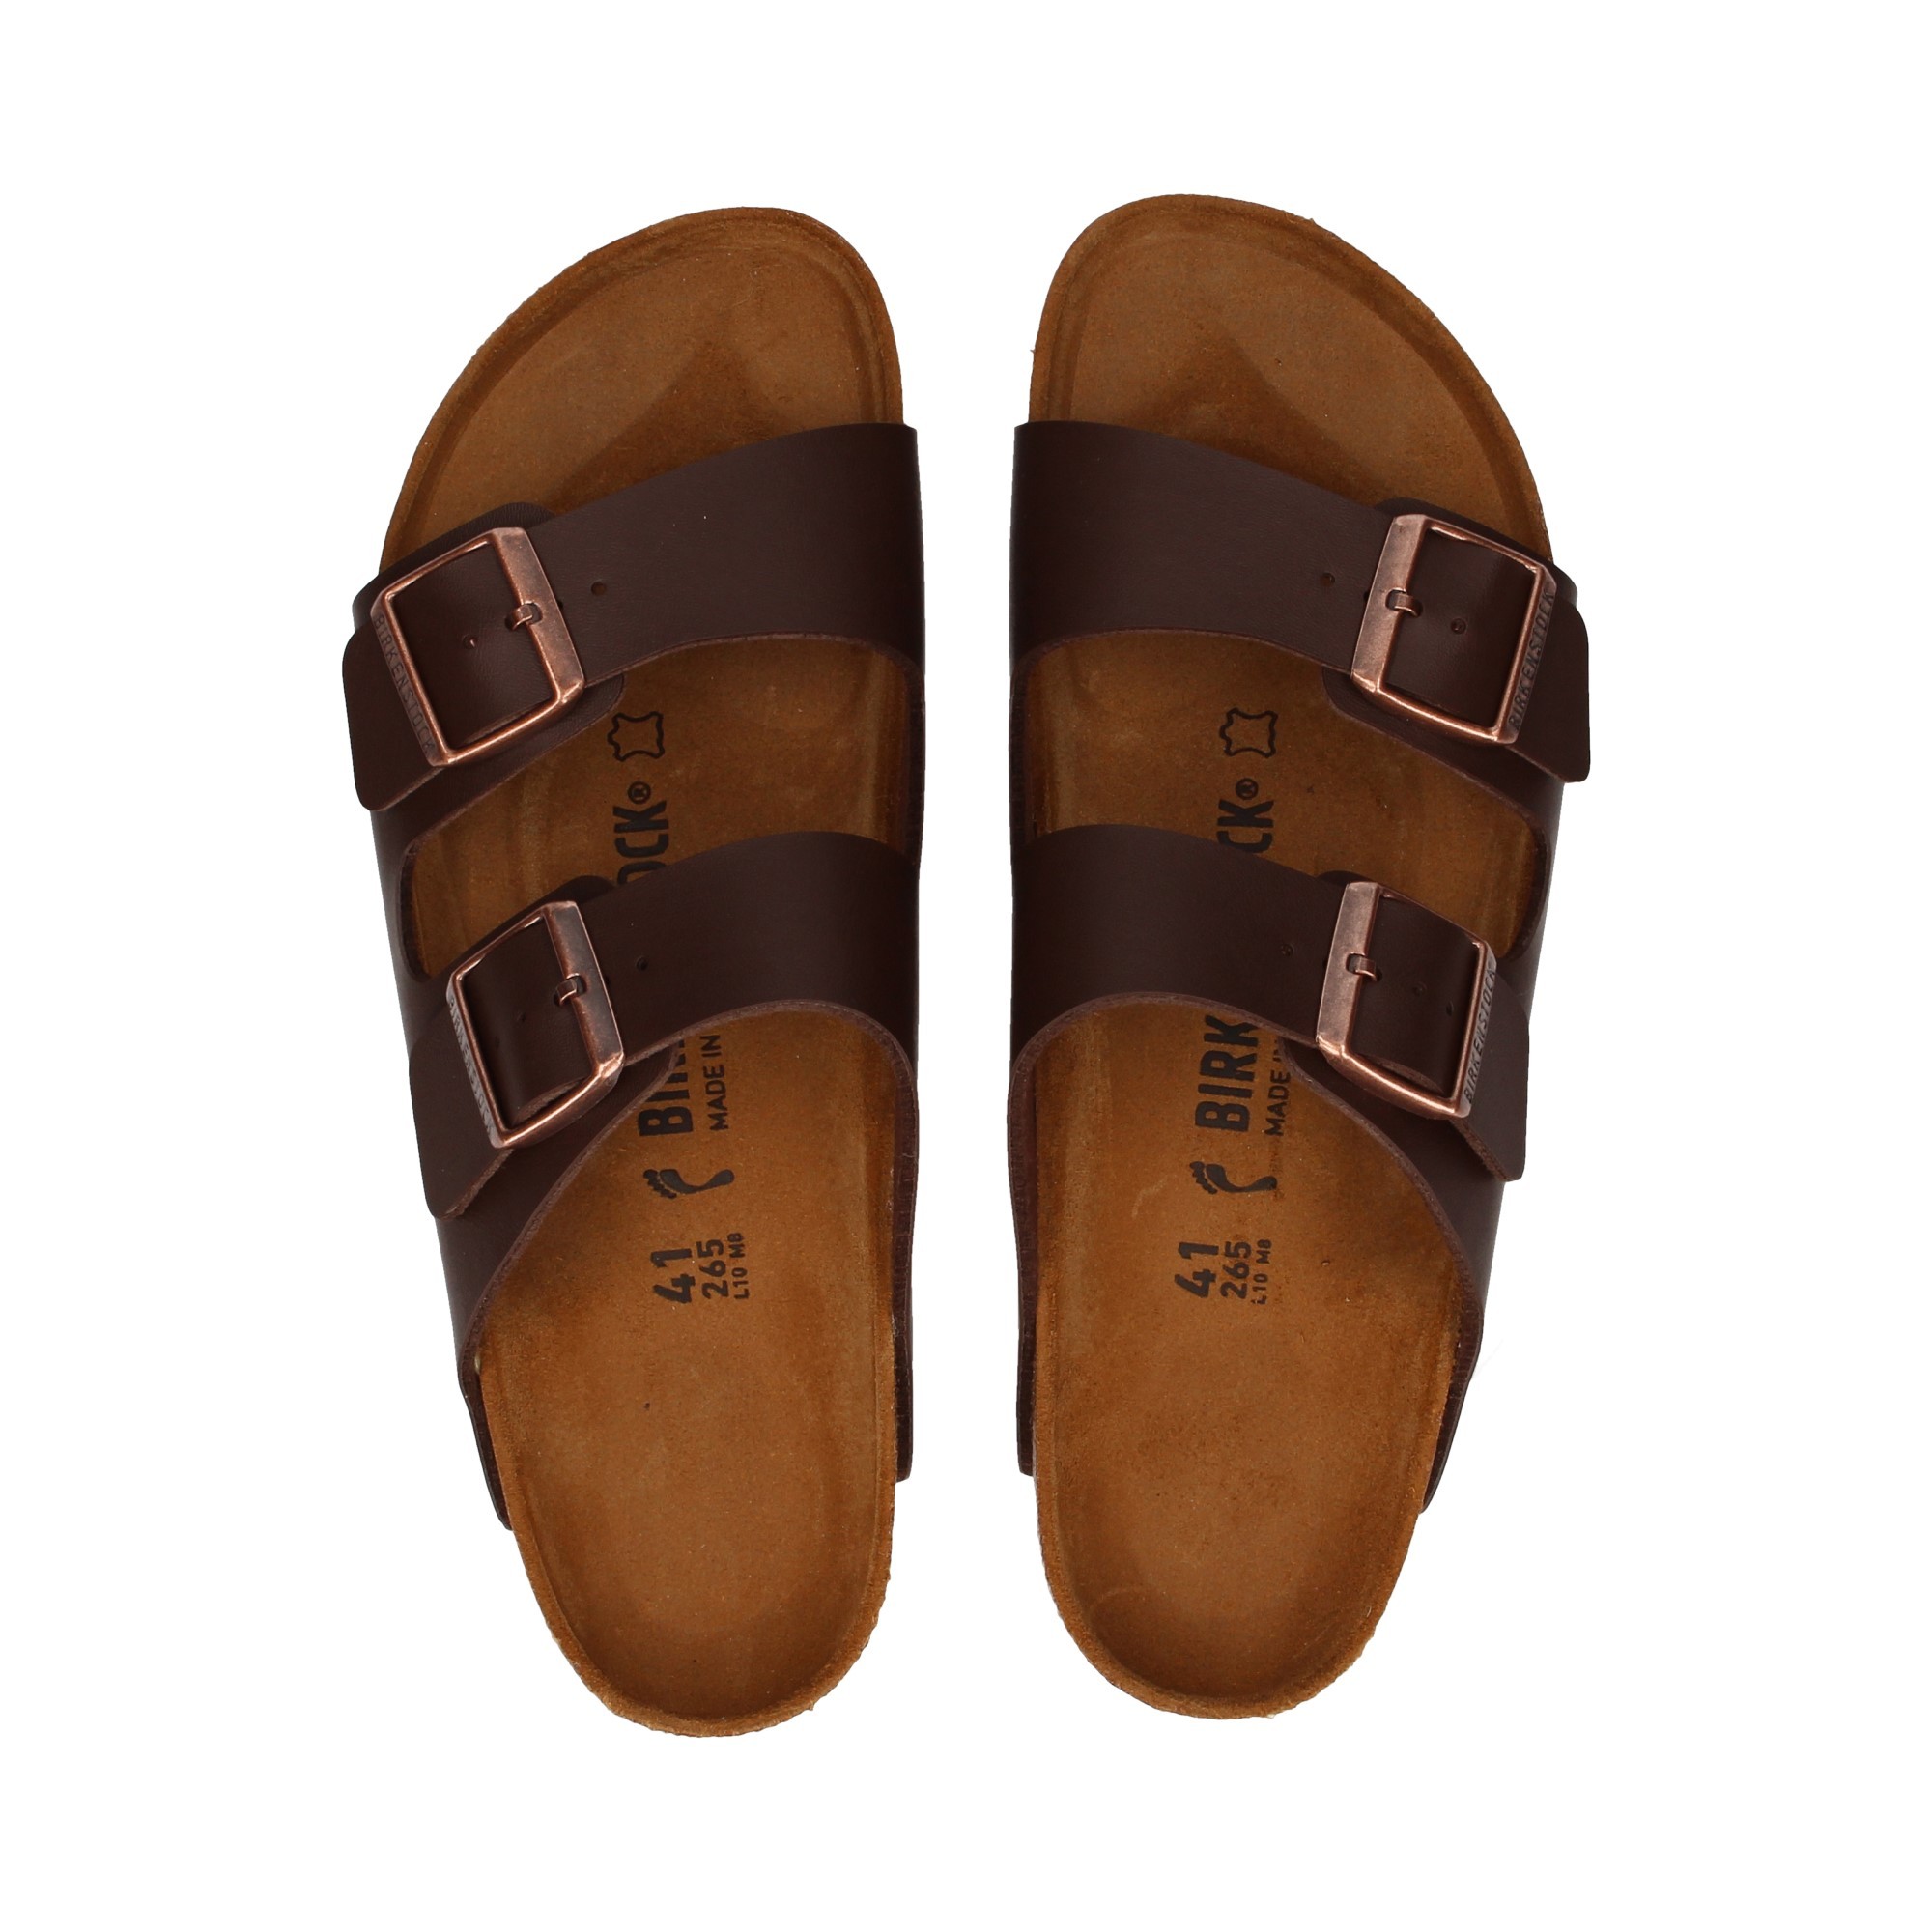 2-dark-brown-leather-buckles